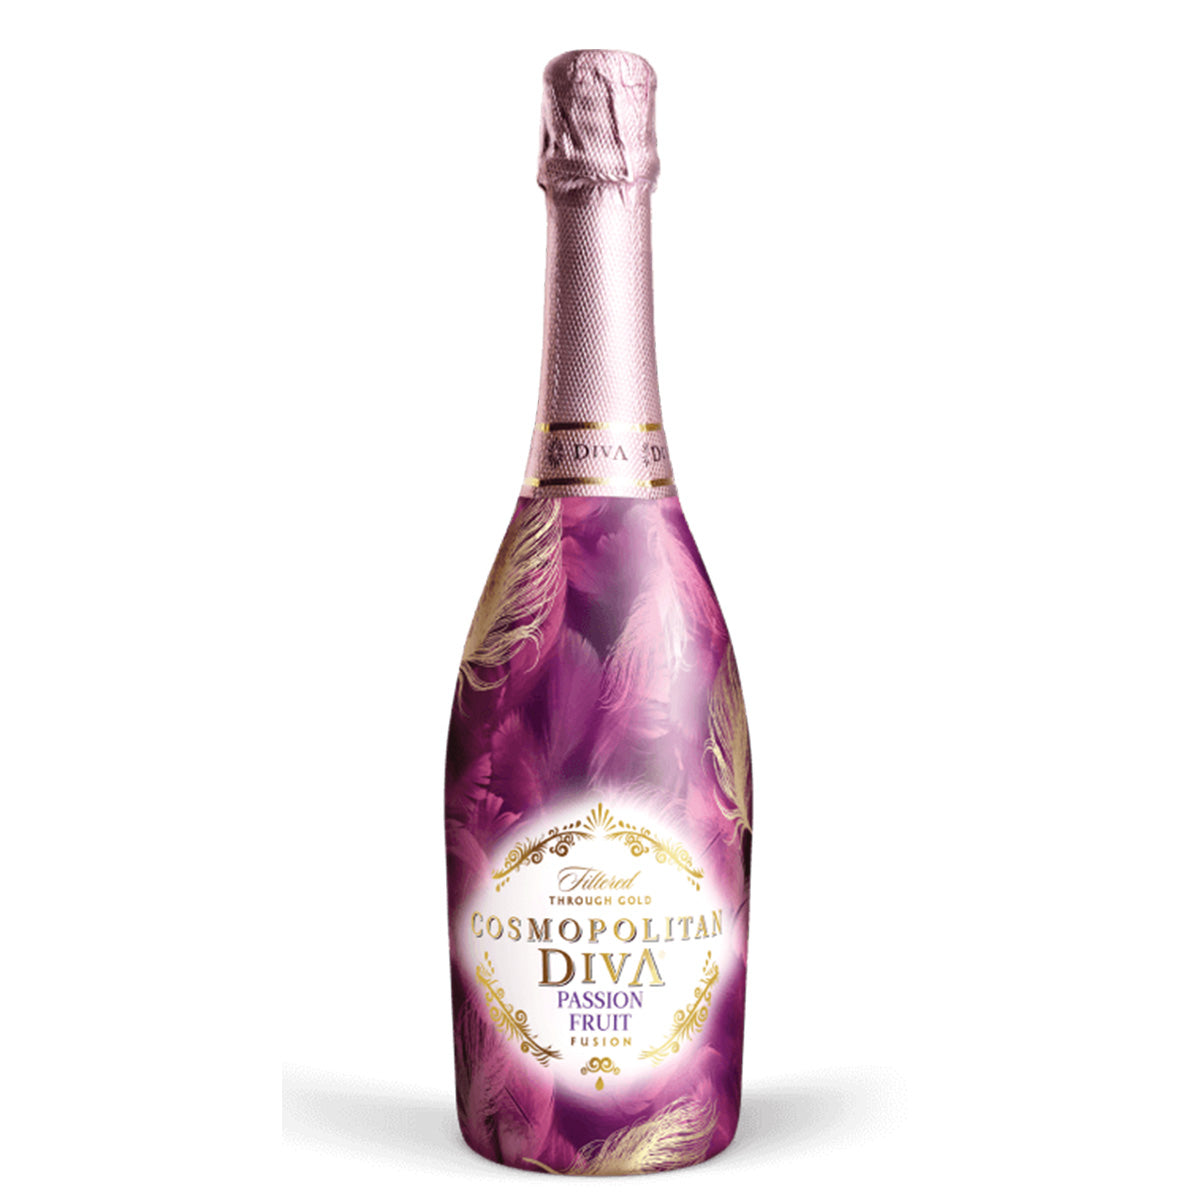 Cosmopolitan Diva Sparkling Wine (Passion Fruit)